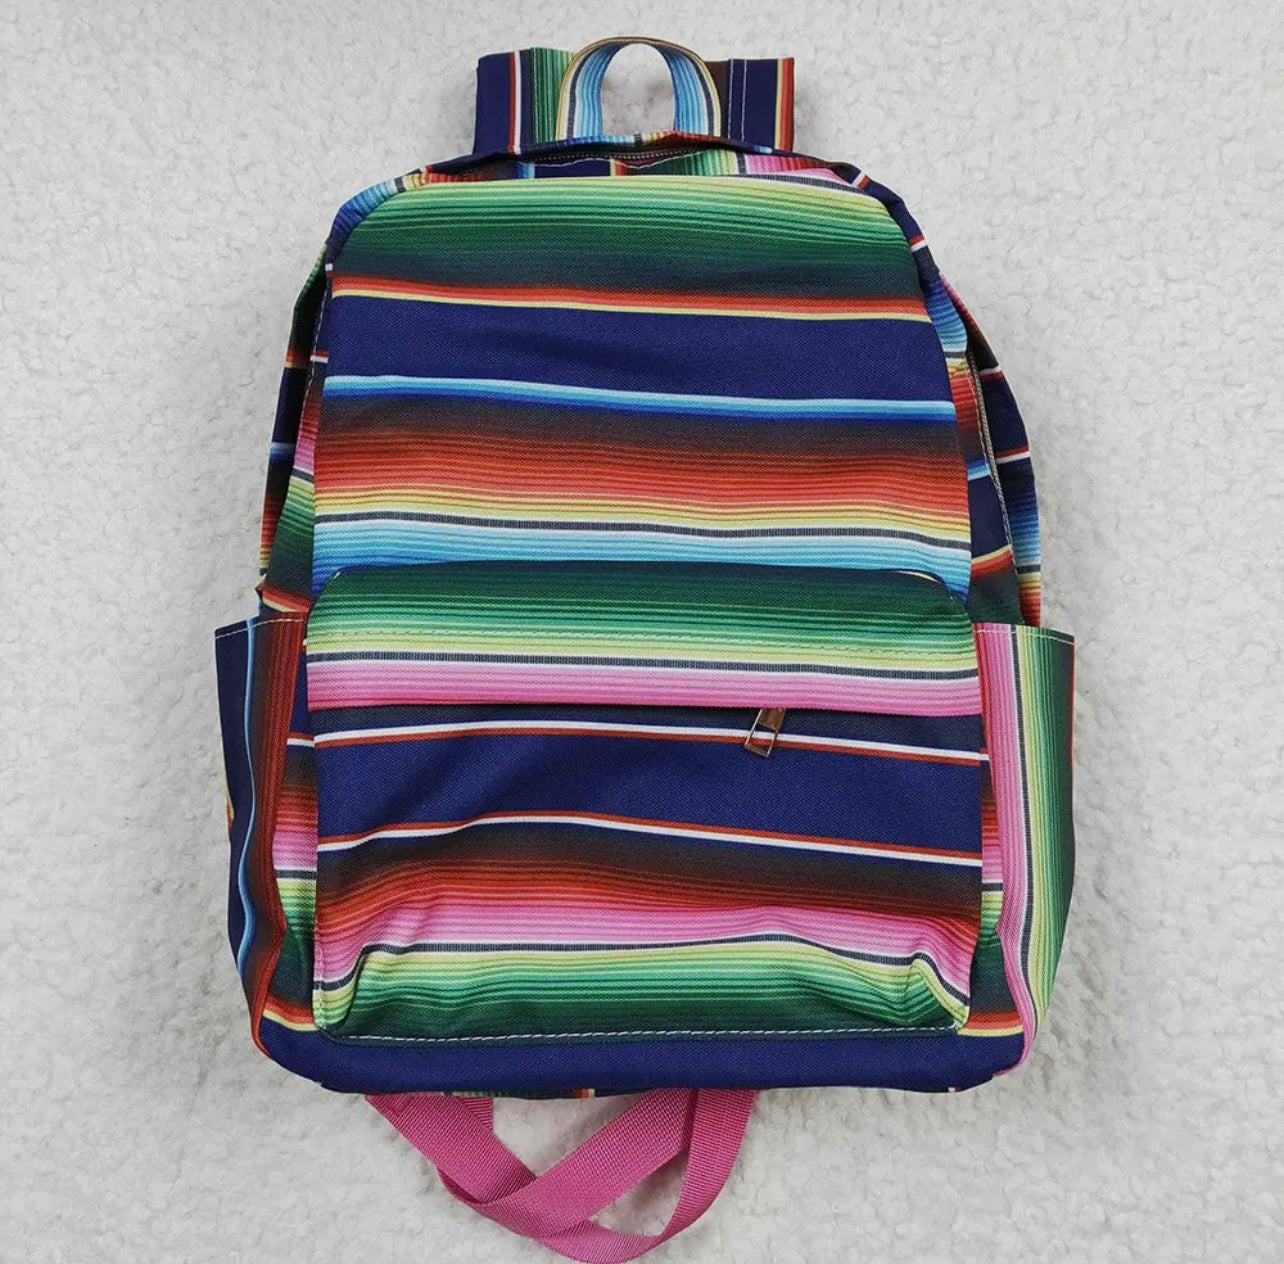 Blue striped backpack